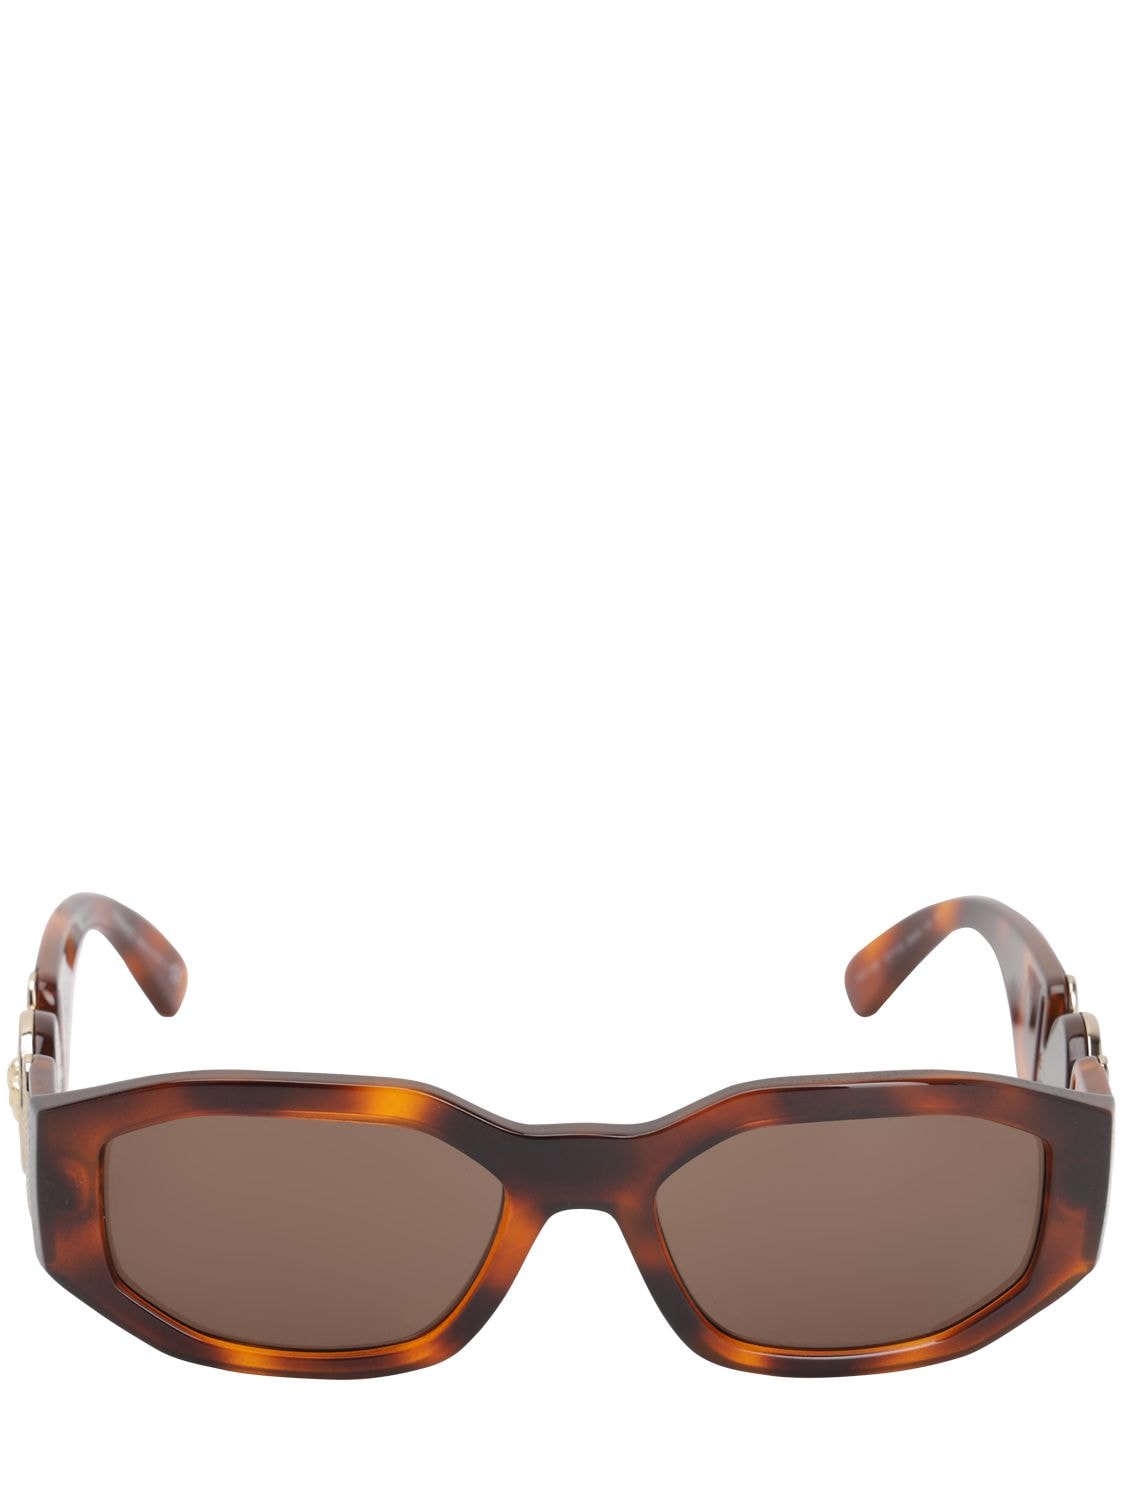 Versace Biggie Squared Sunglasses